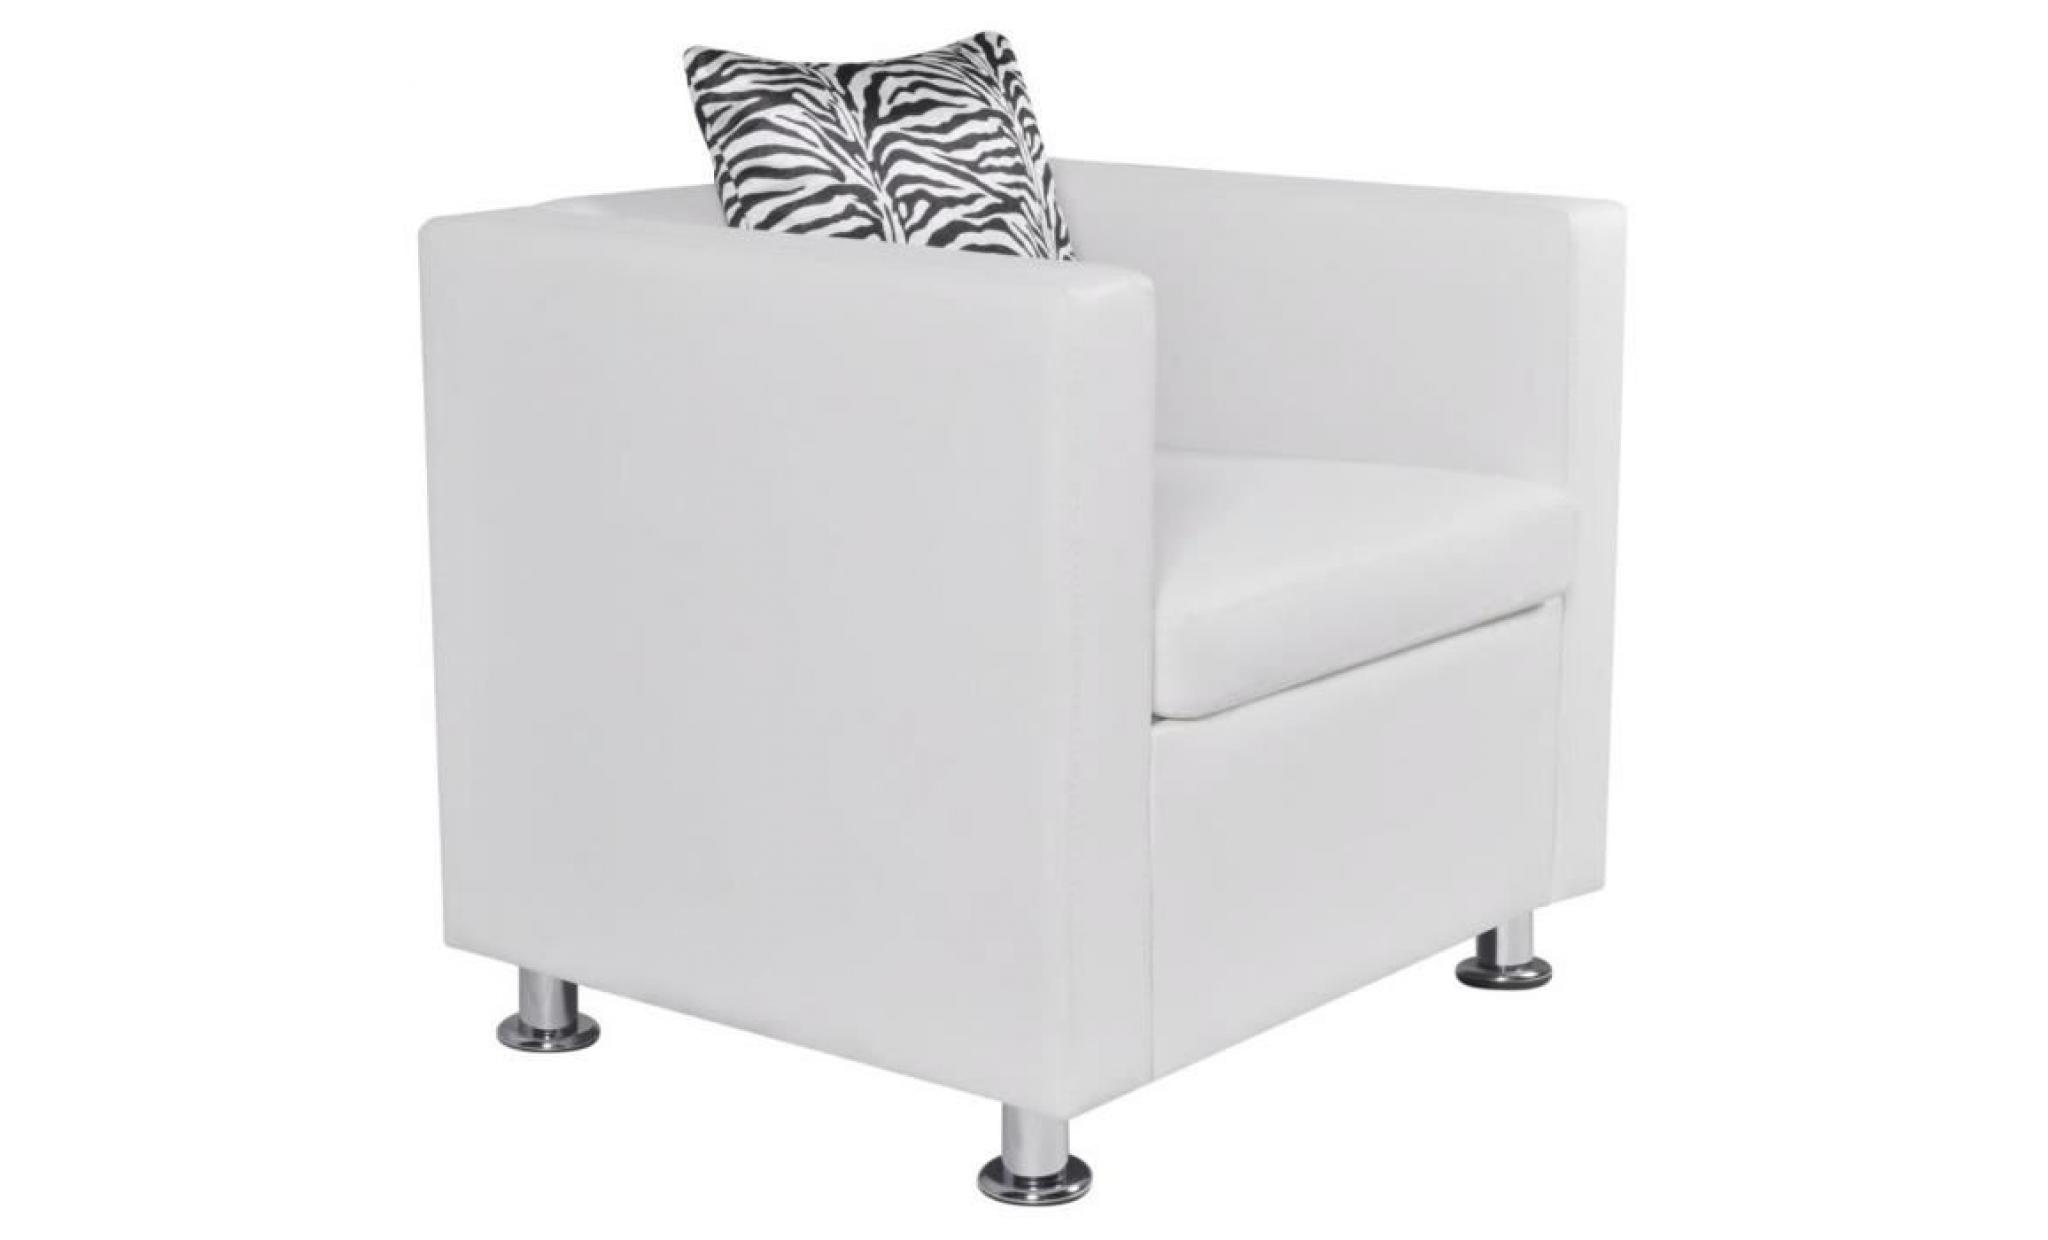 fauteuil cuir synthétique blanc fauteuil scandinave fauteuil relaxation pas cher